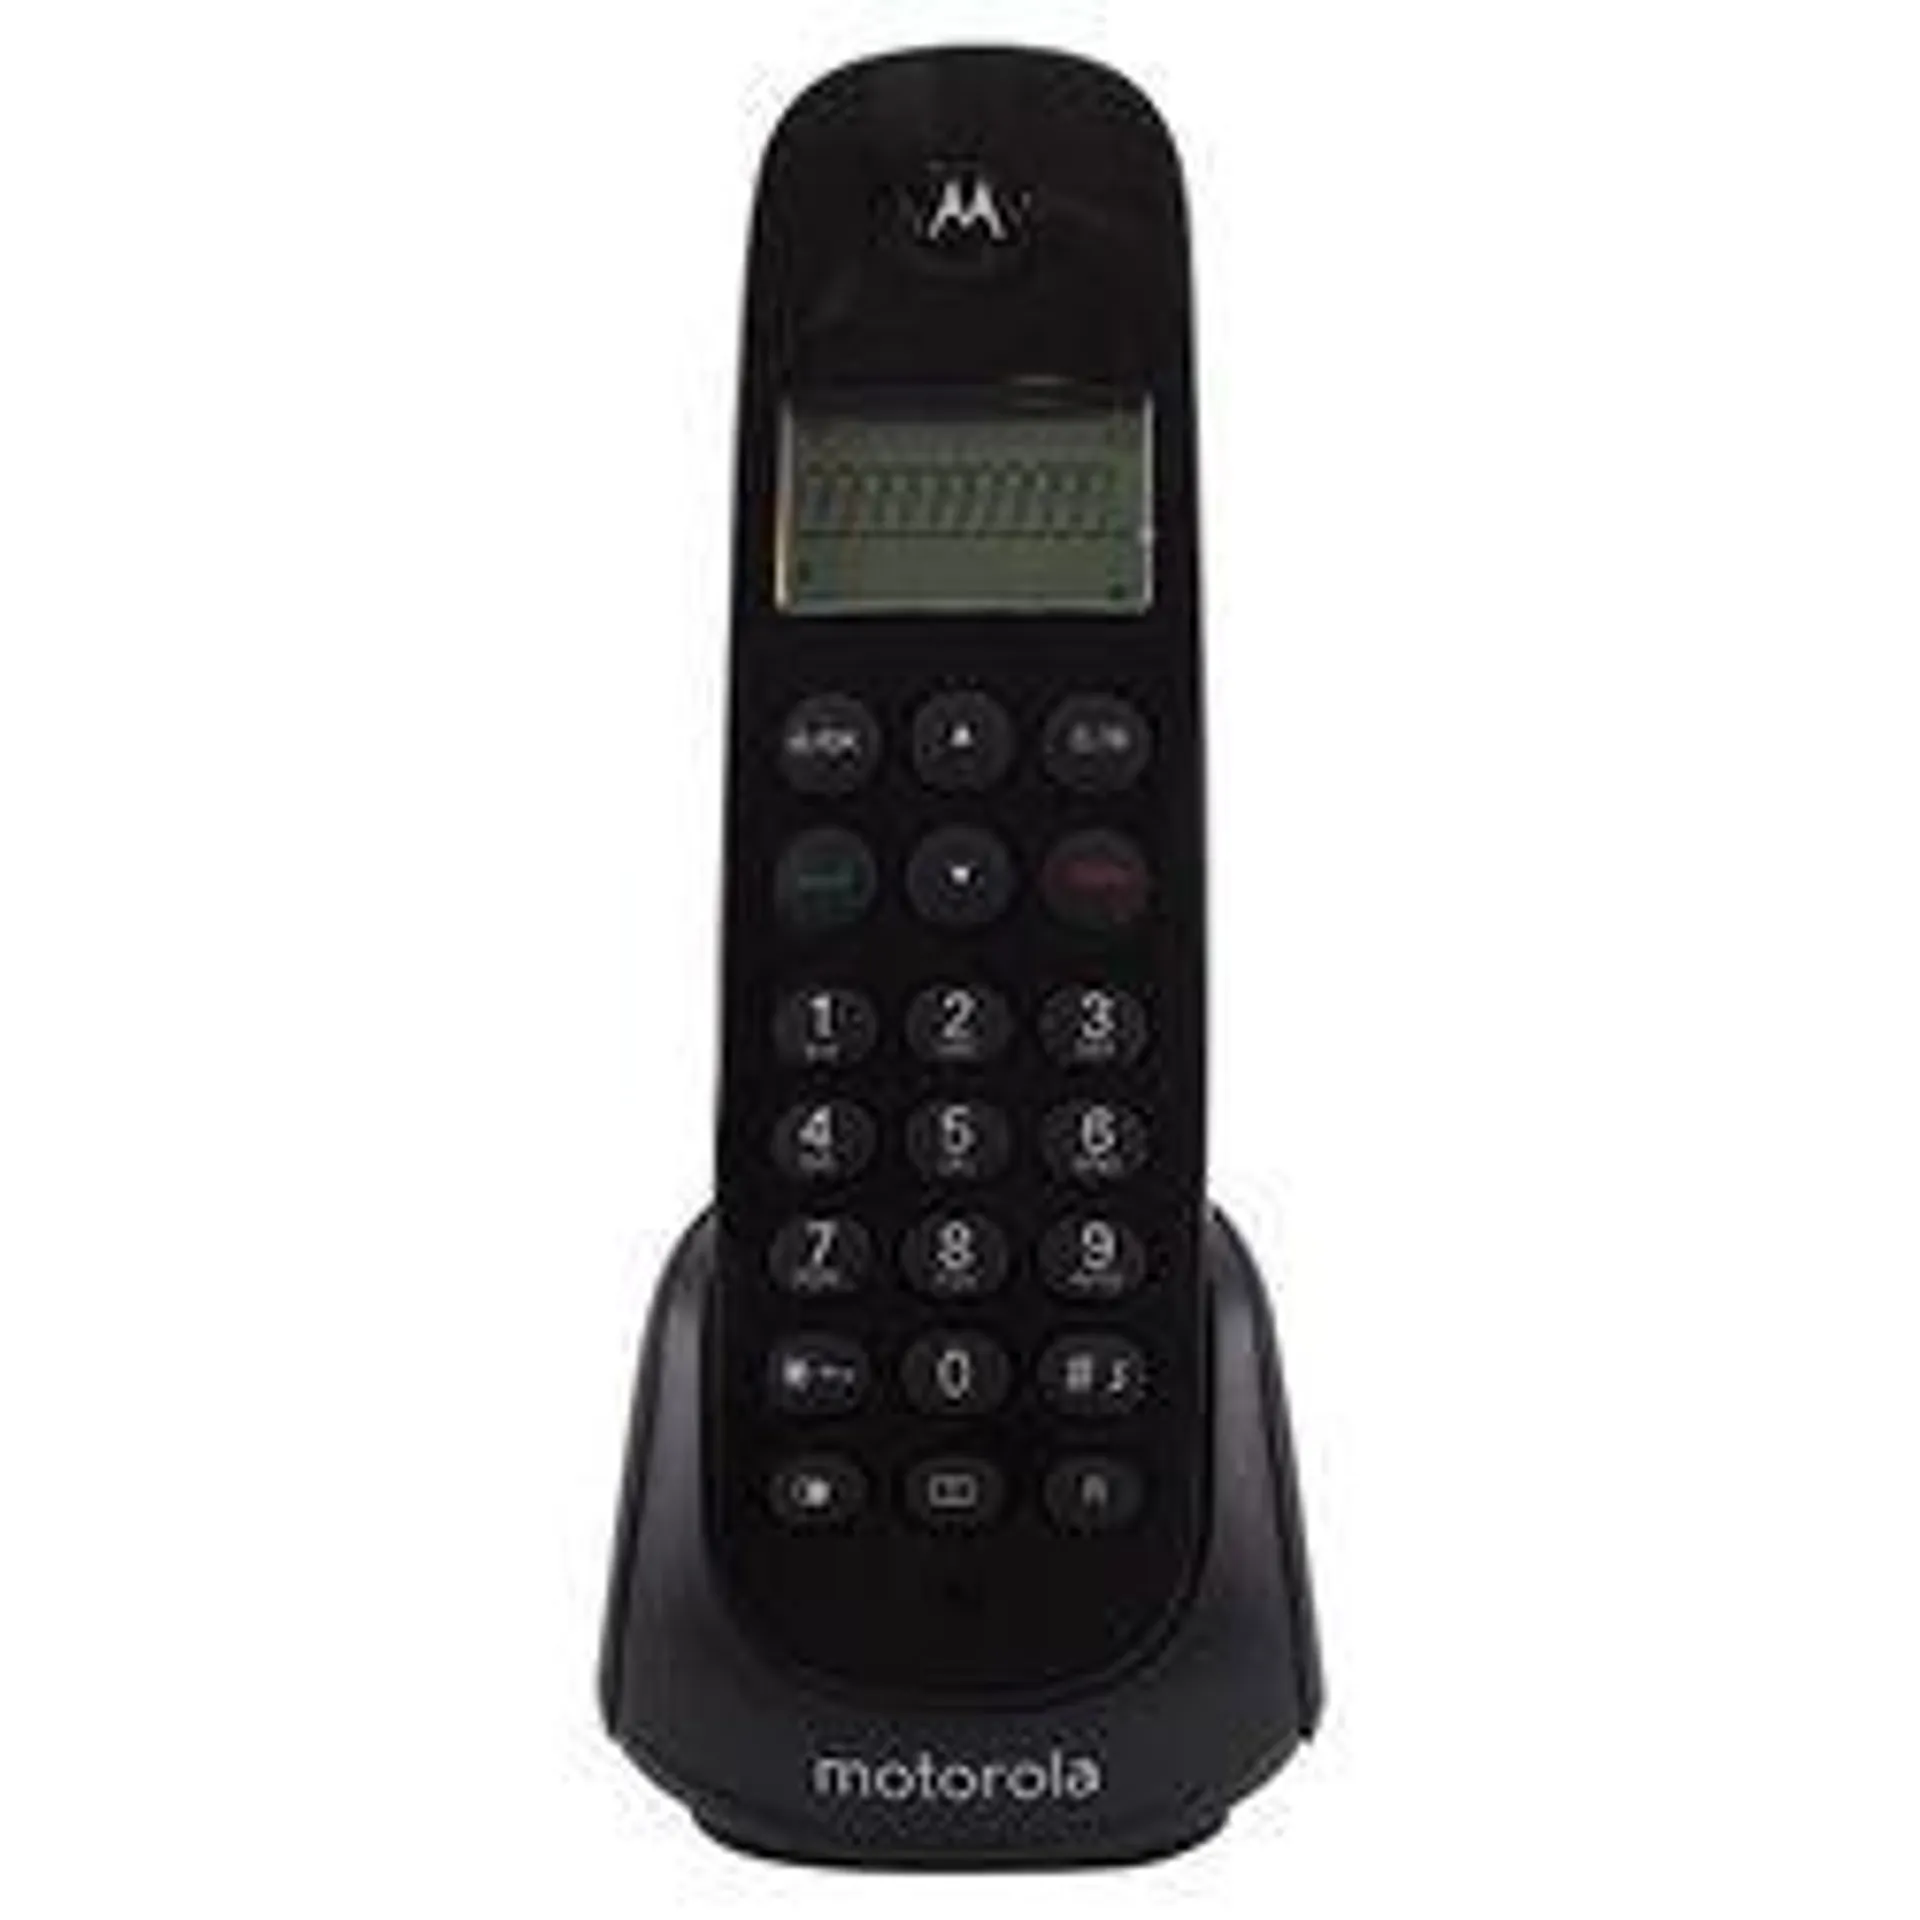 MOTOROLA TELEFONO INALAMBRICO C/ID 1.9GHZ